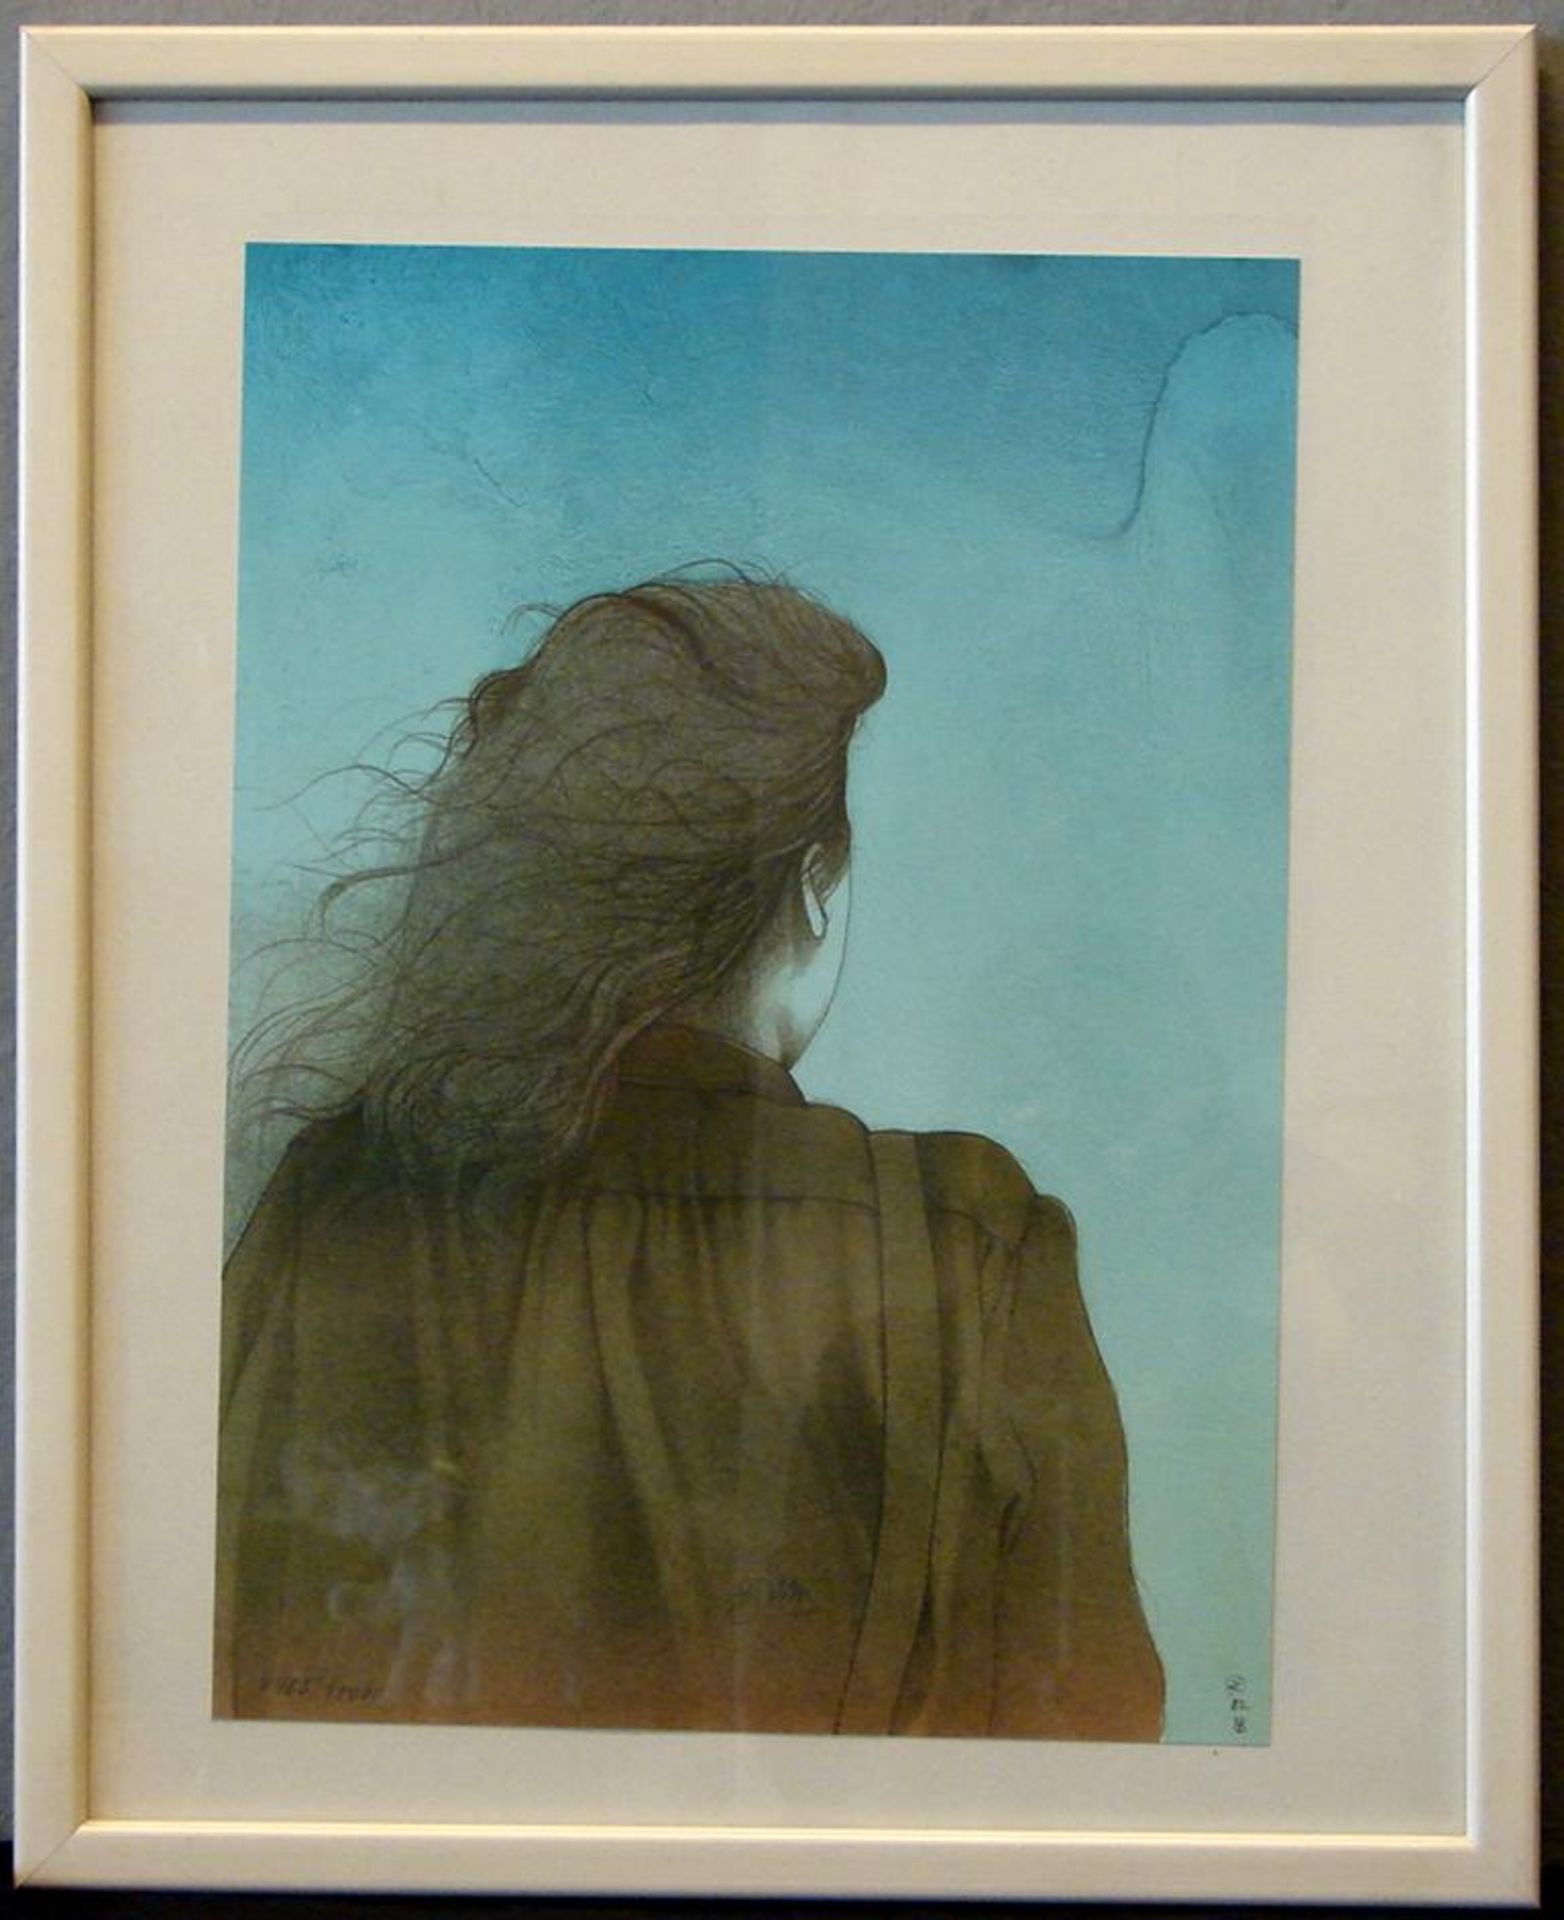 BRUNO BRUNI, "Frau Portrait", dat.'82, 7963/10000, ca. 39 x 49 cm